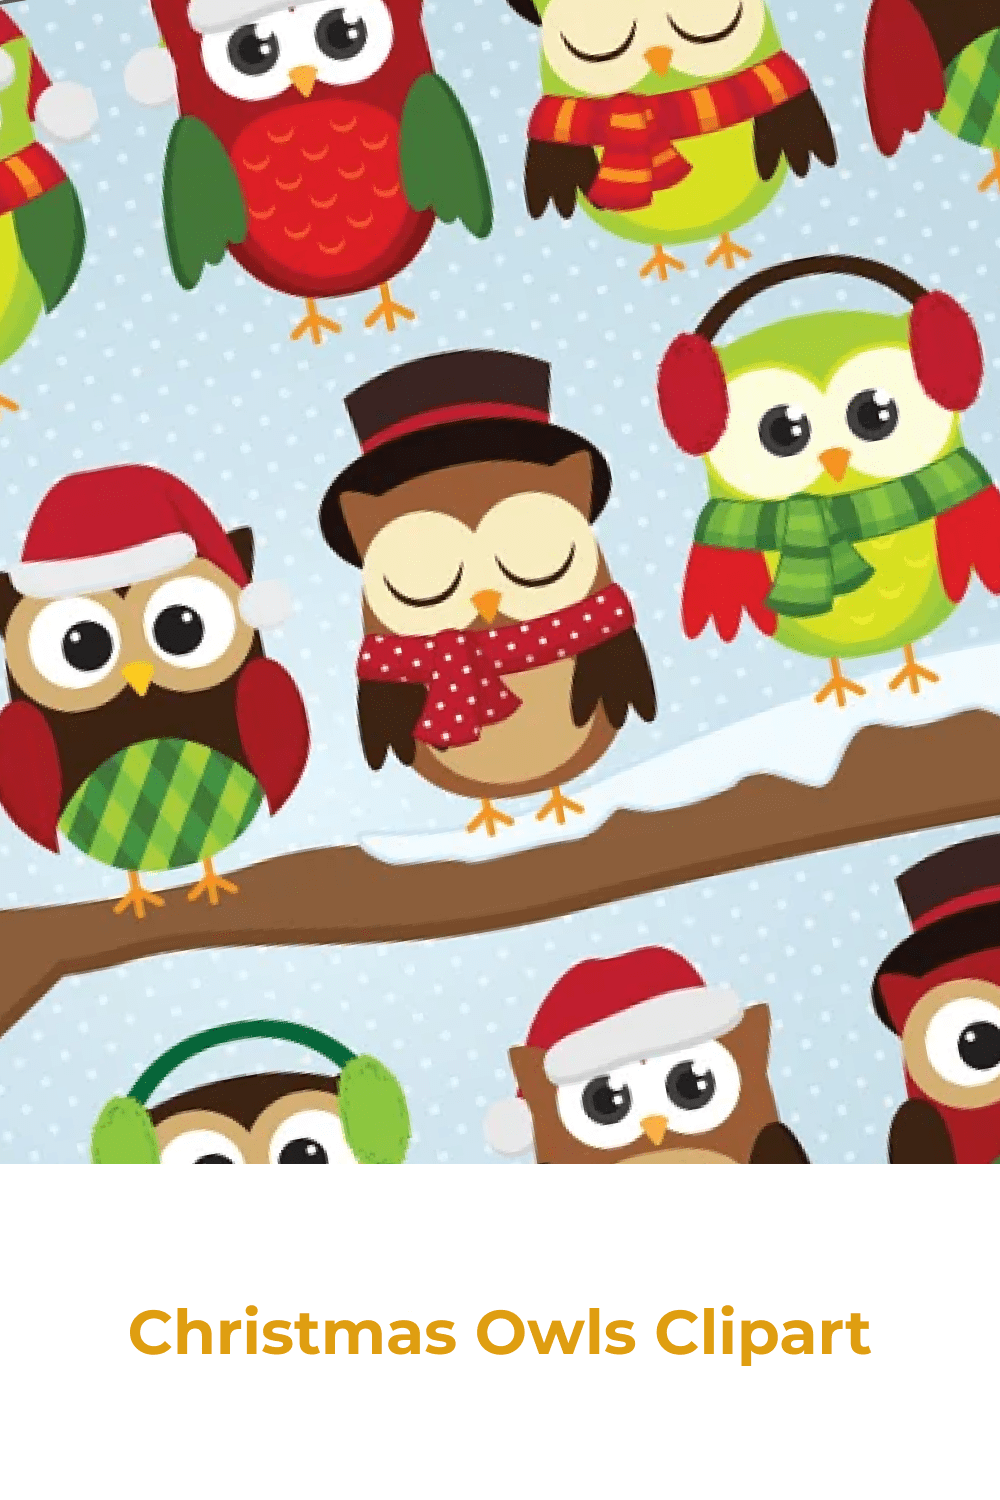 Christmas Owls Clipart.